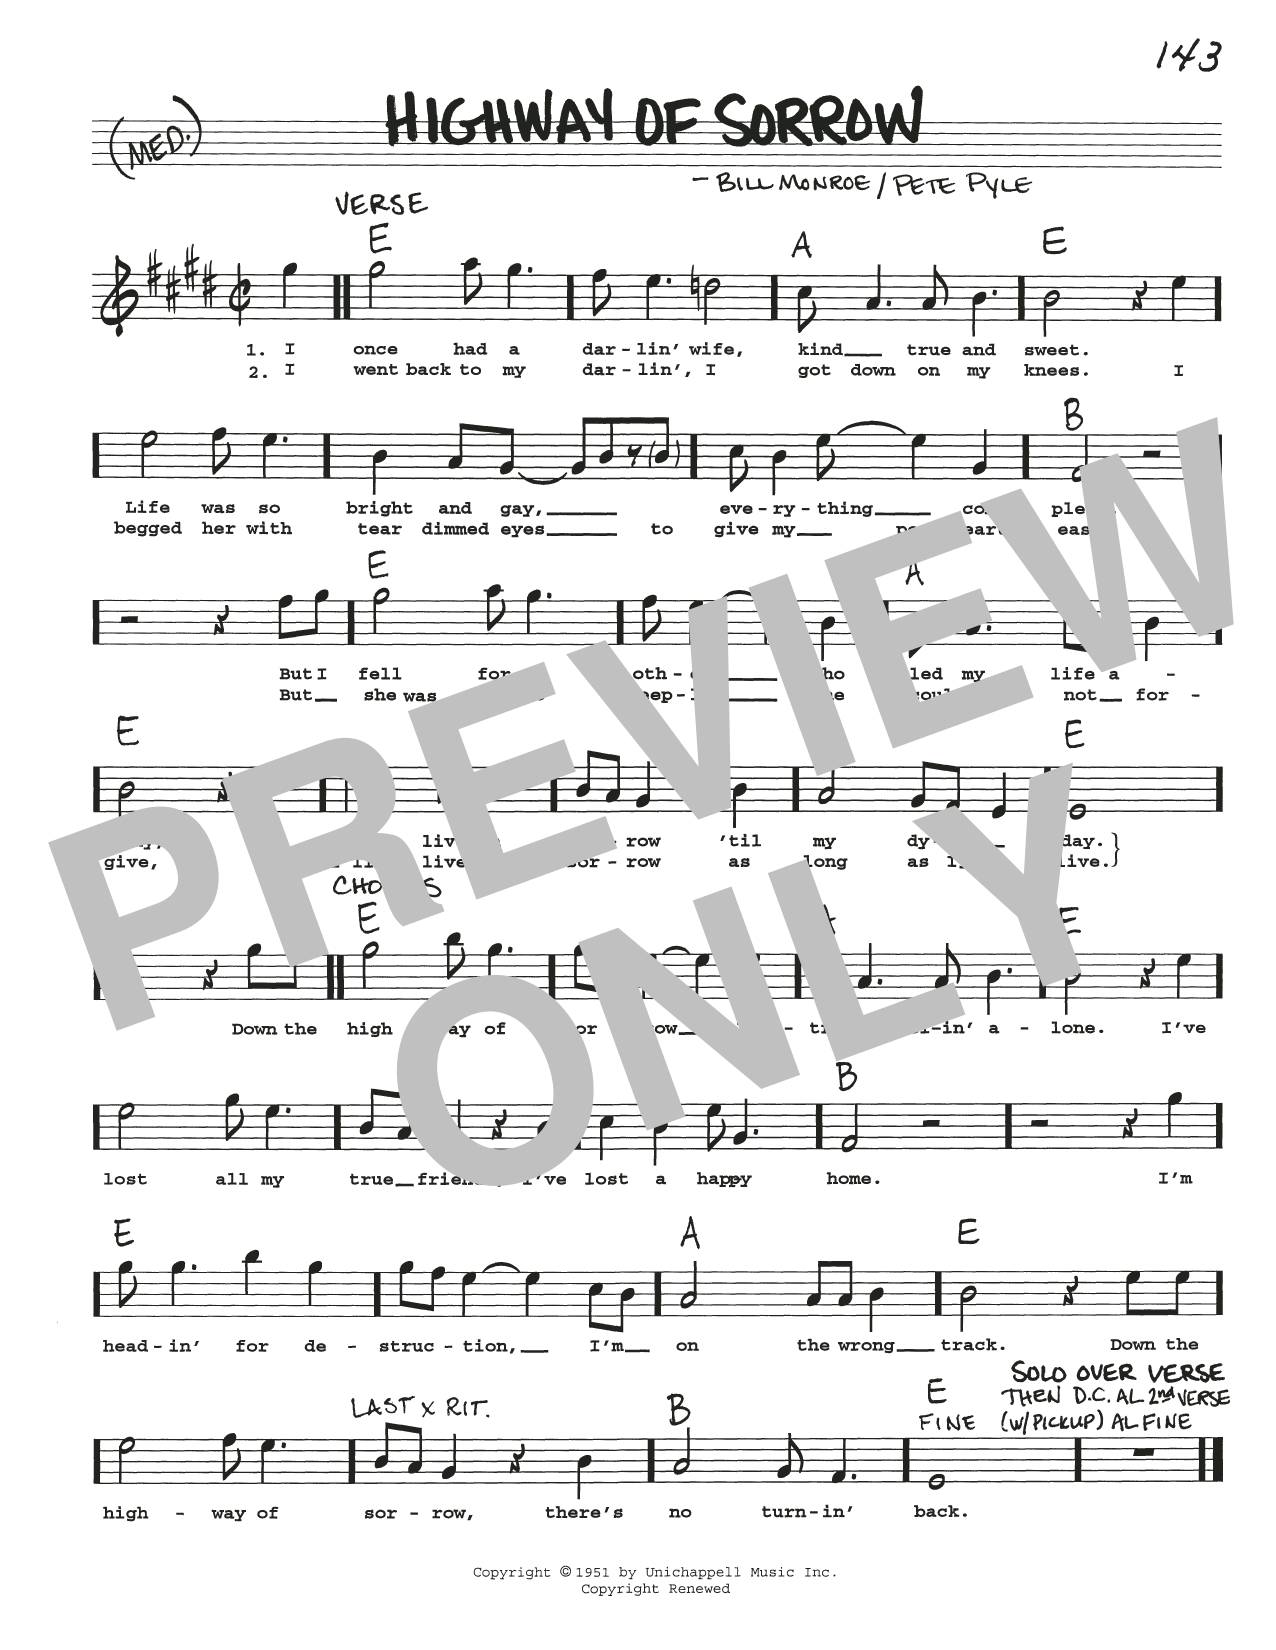 Bill Monroe Highway Of Sorrow Sheet Music Notes & Chords for Real Book – Melody, Lyrics & Chords - Download or Print PDF